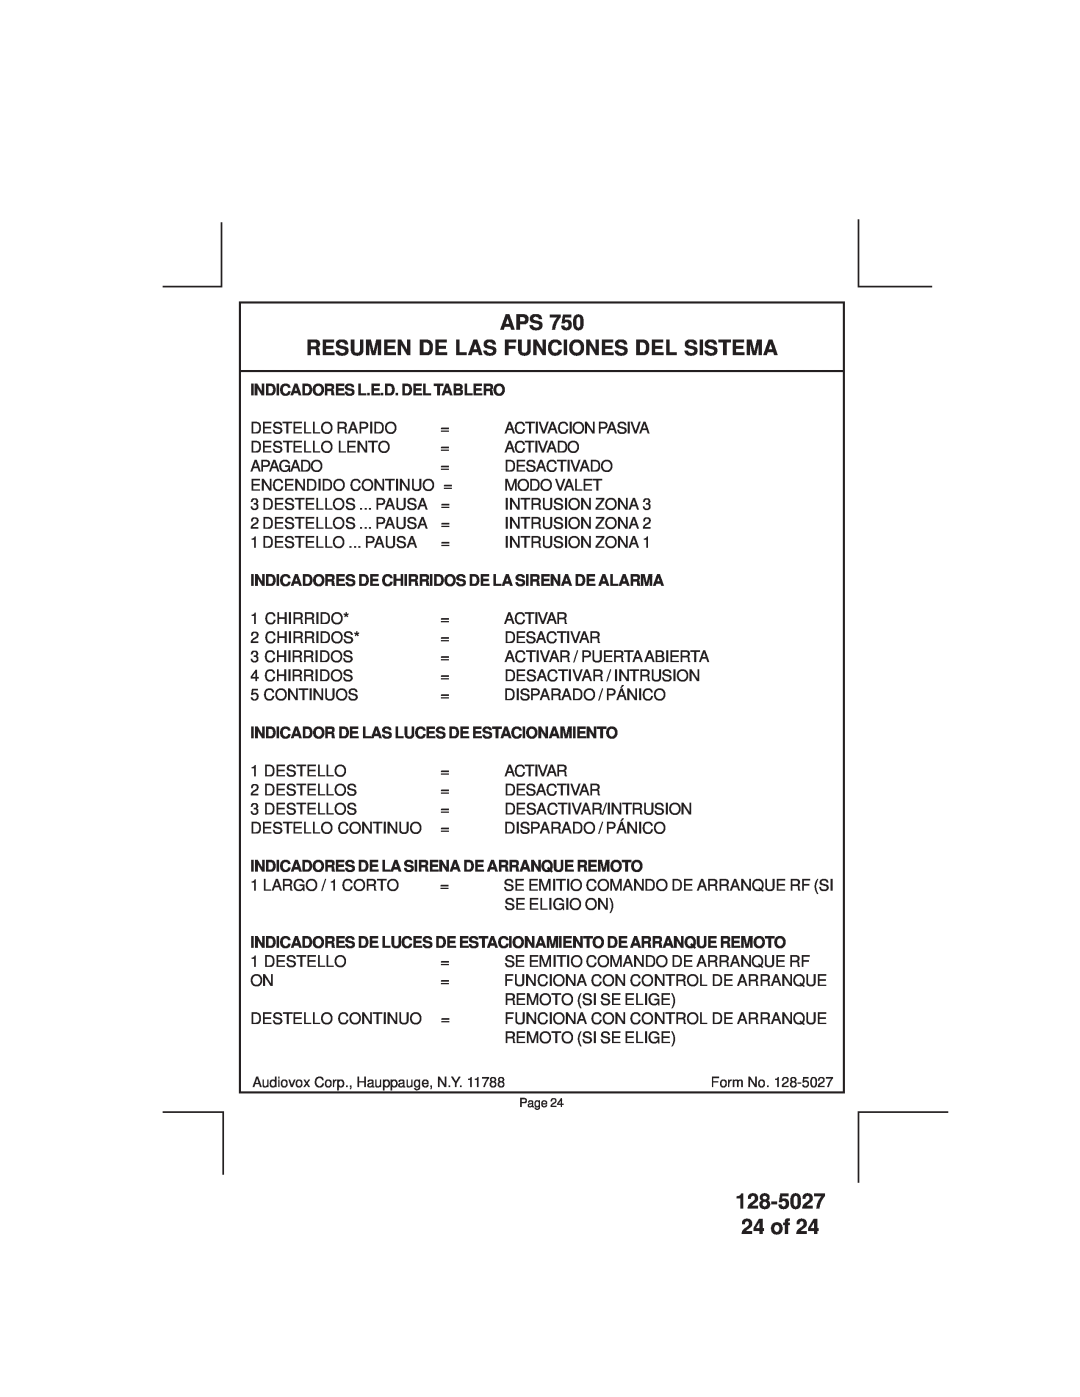 Audiovox APS-750 owner manual Aps Resumen De Las Funciones Del Sistema, 128-5027 24 of, Indicadores L.E.D. Del Tablero 